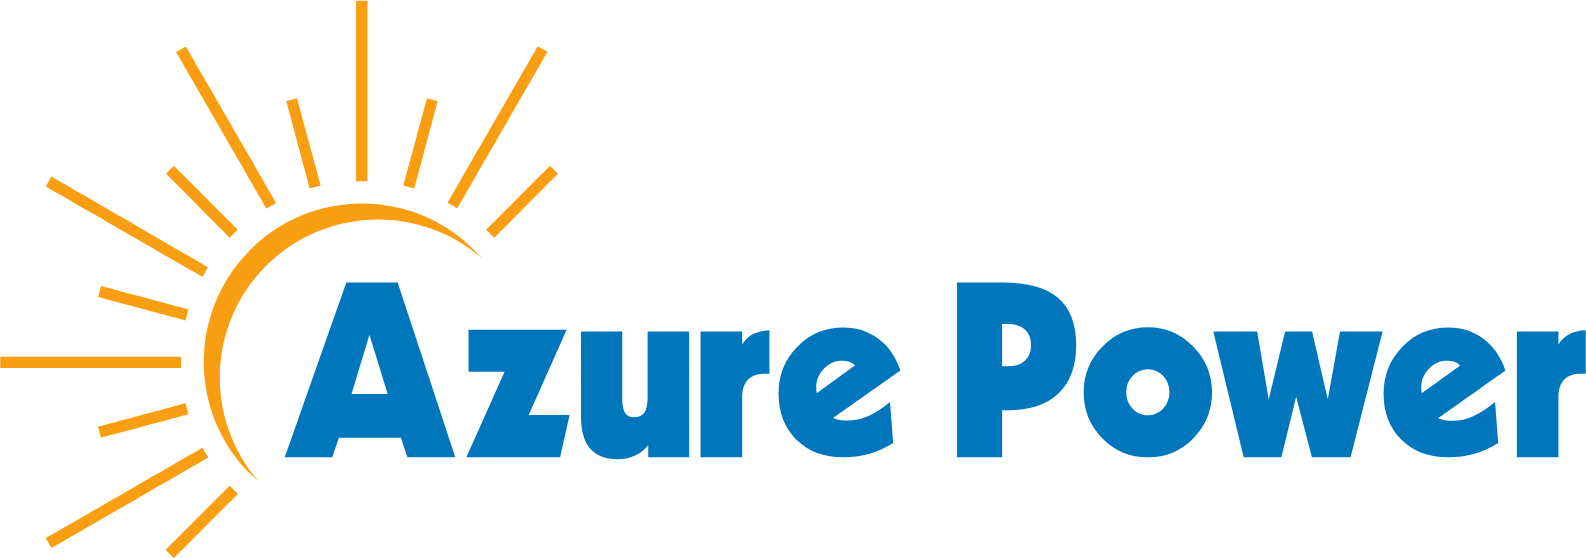 Azure Power
 logo large (transparent PNG)